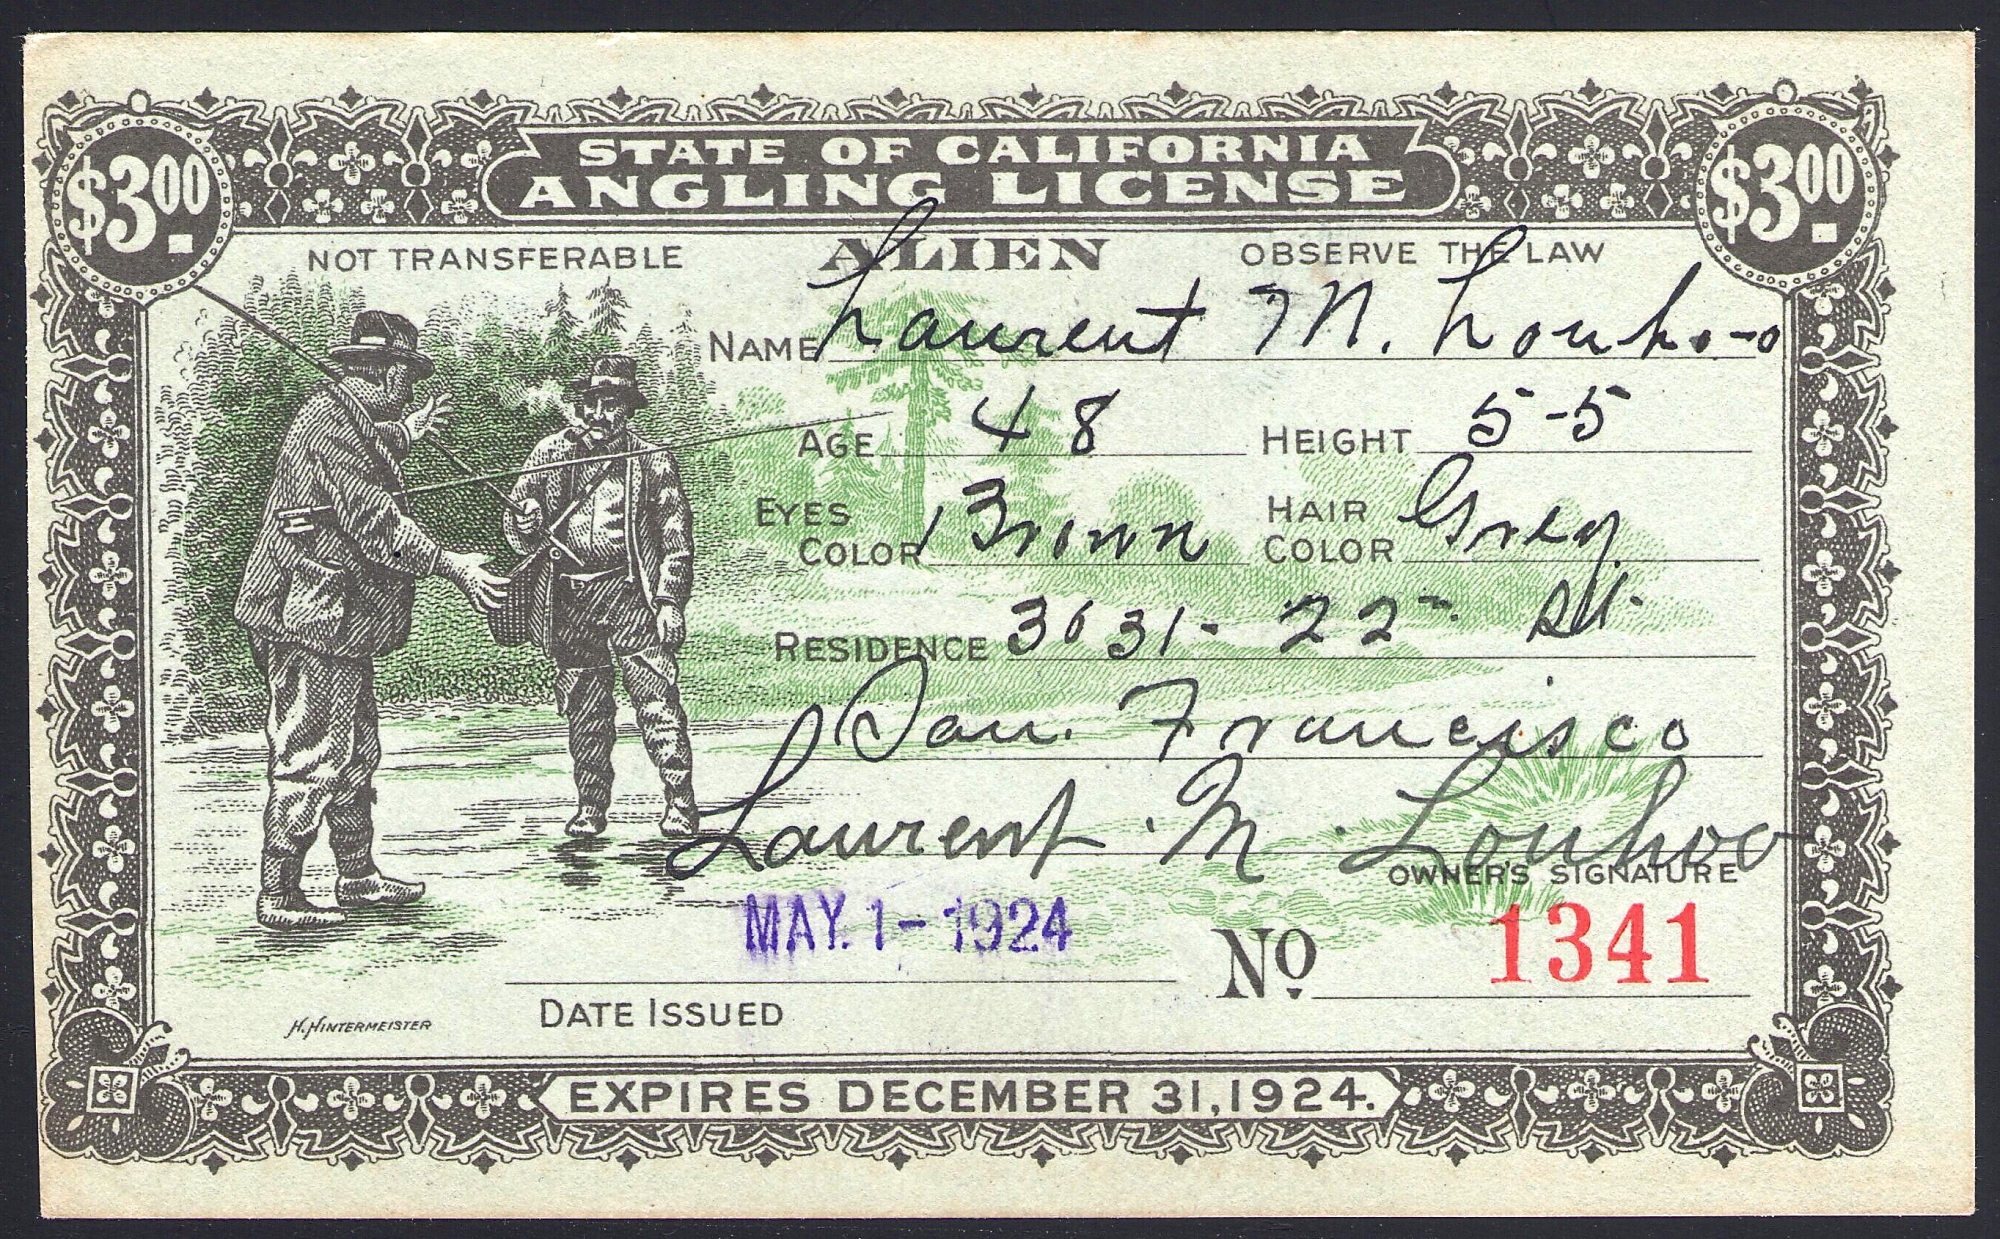 1924 Alien Fishing License California